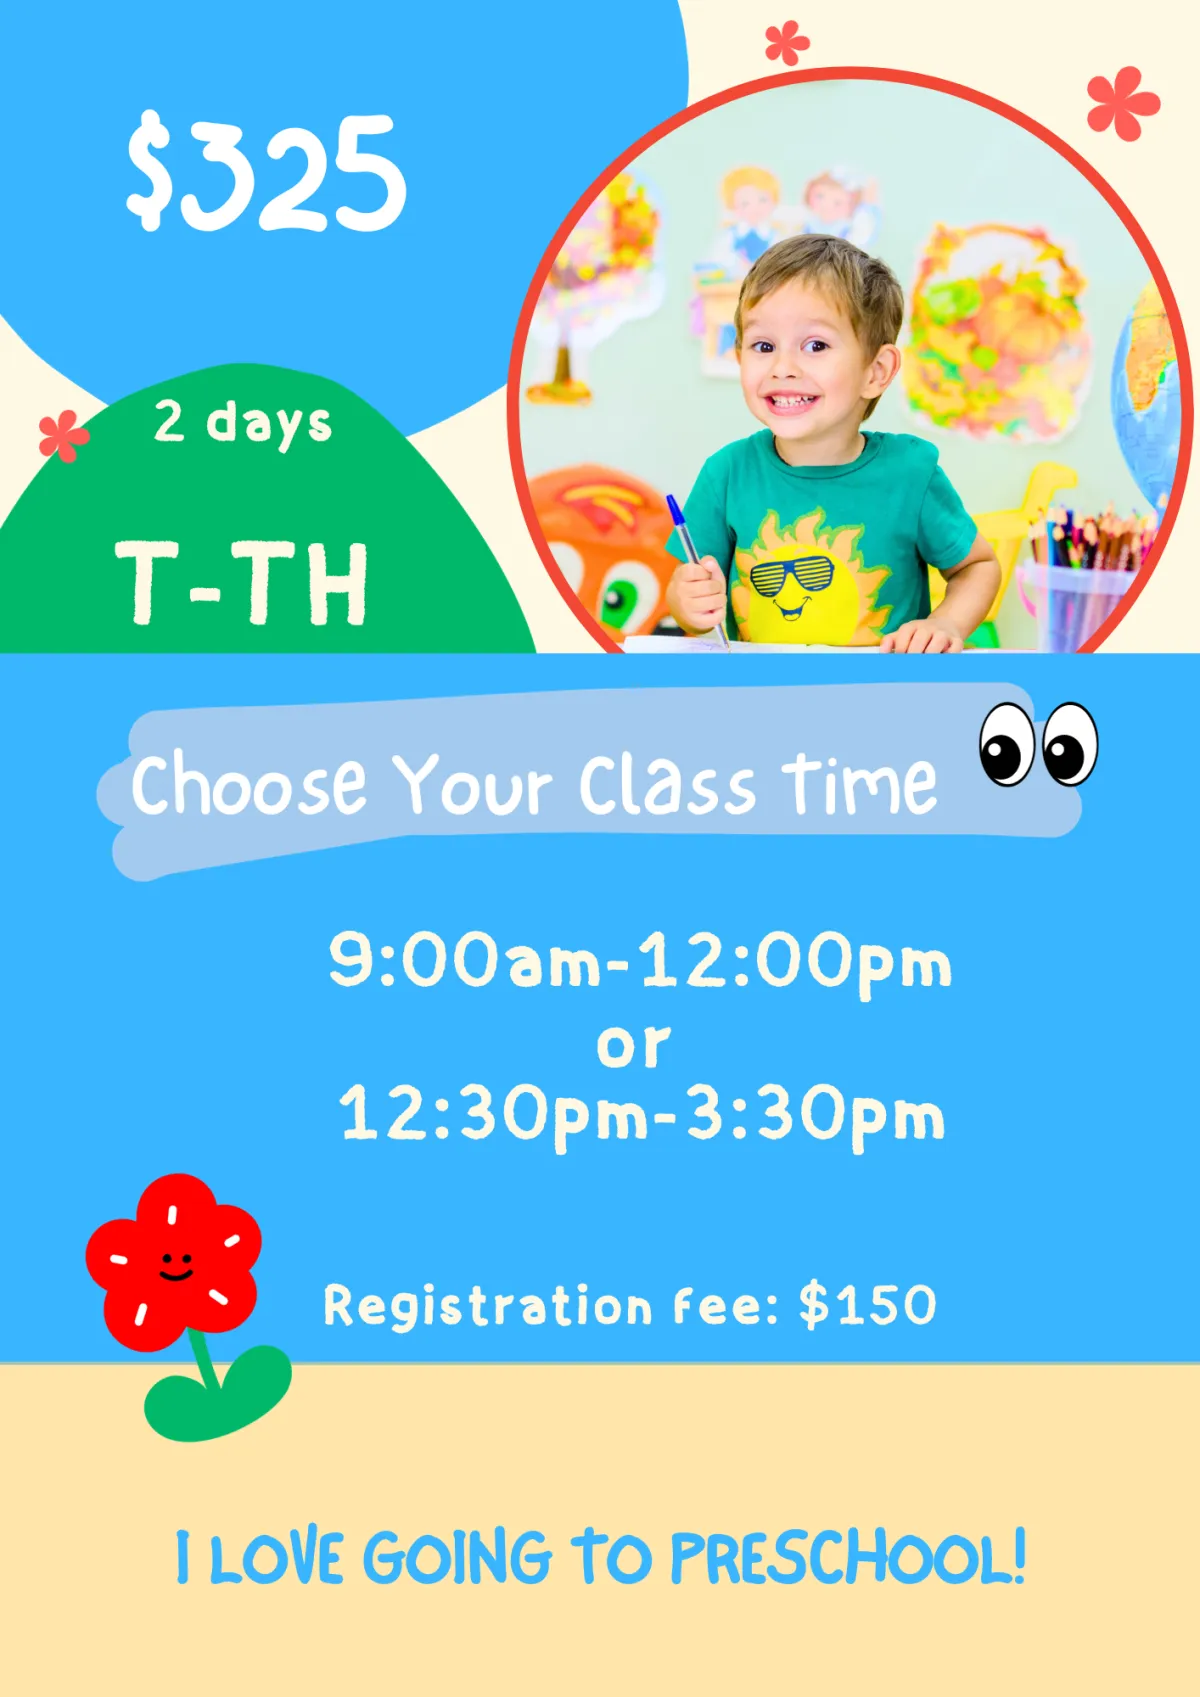 2 days preschool class price